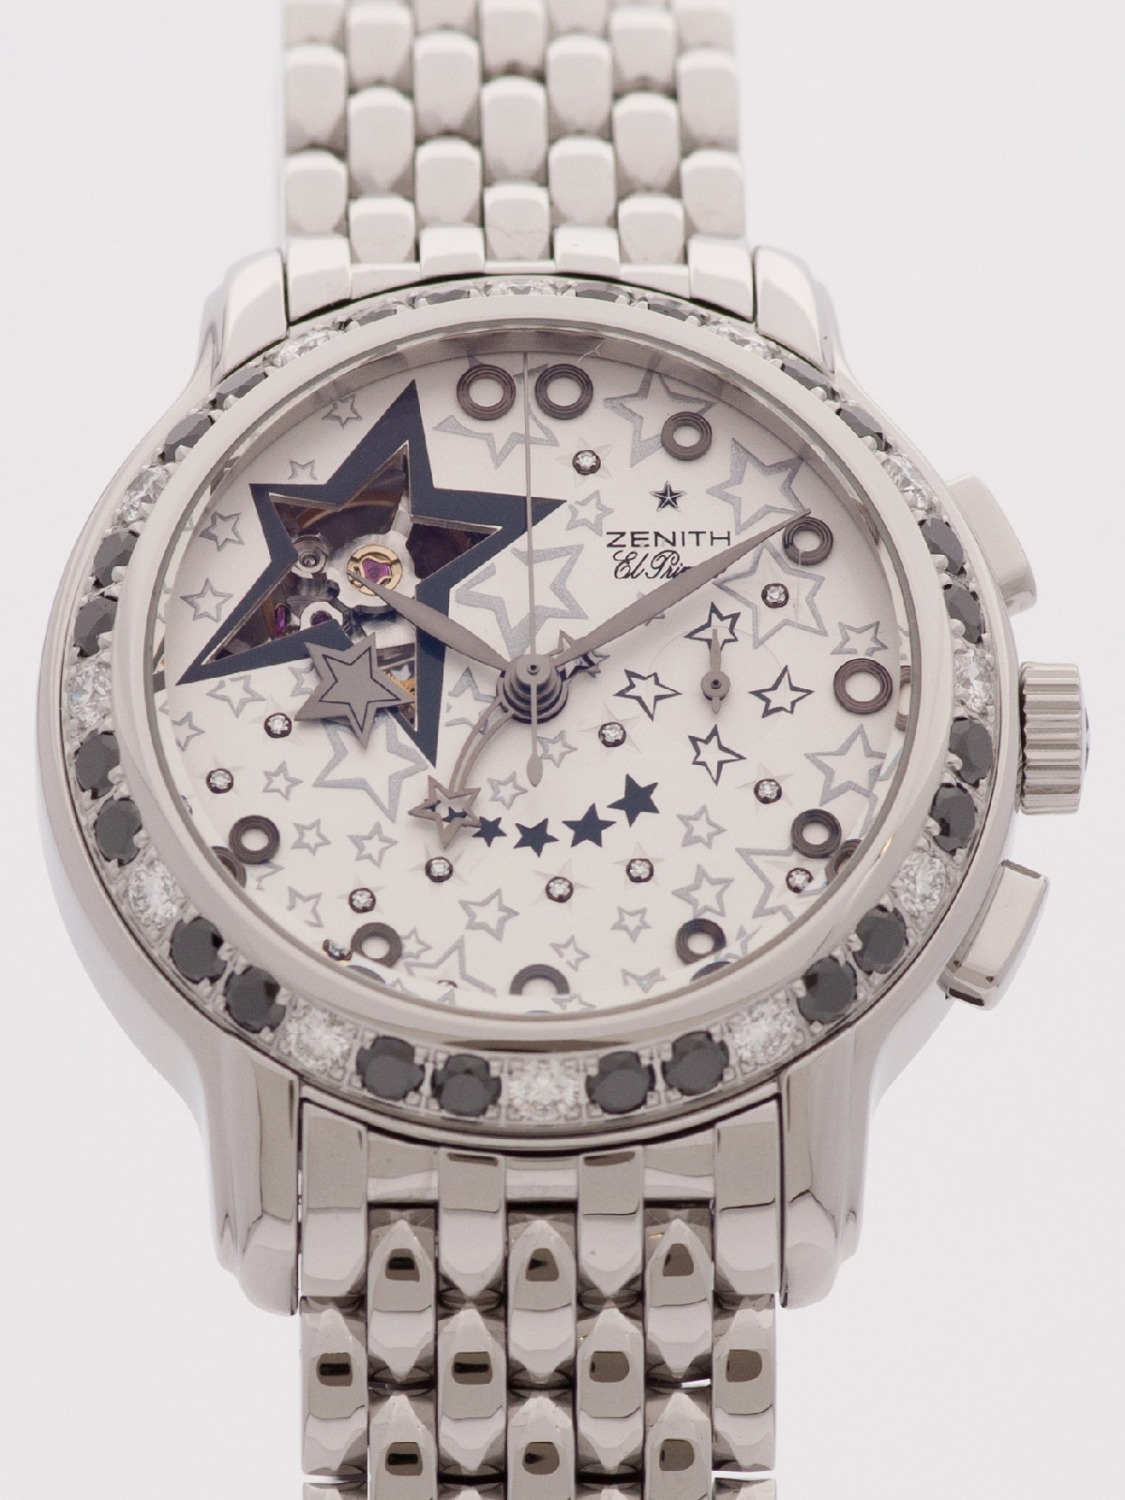 Zenith Star Open Glam Rock El Primero watch, silver